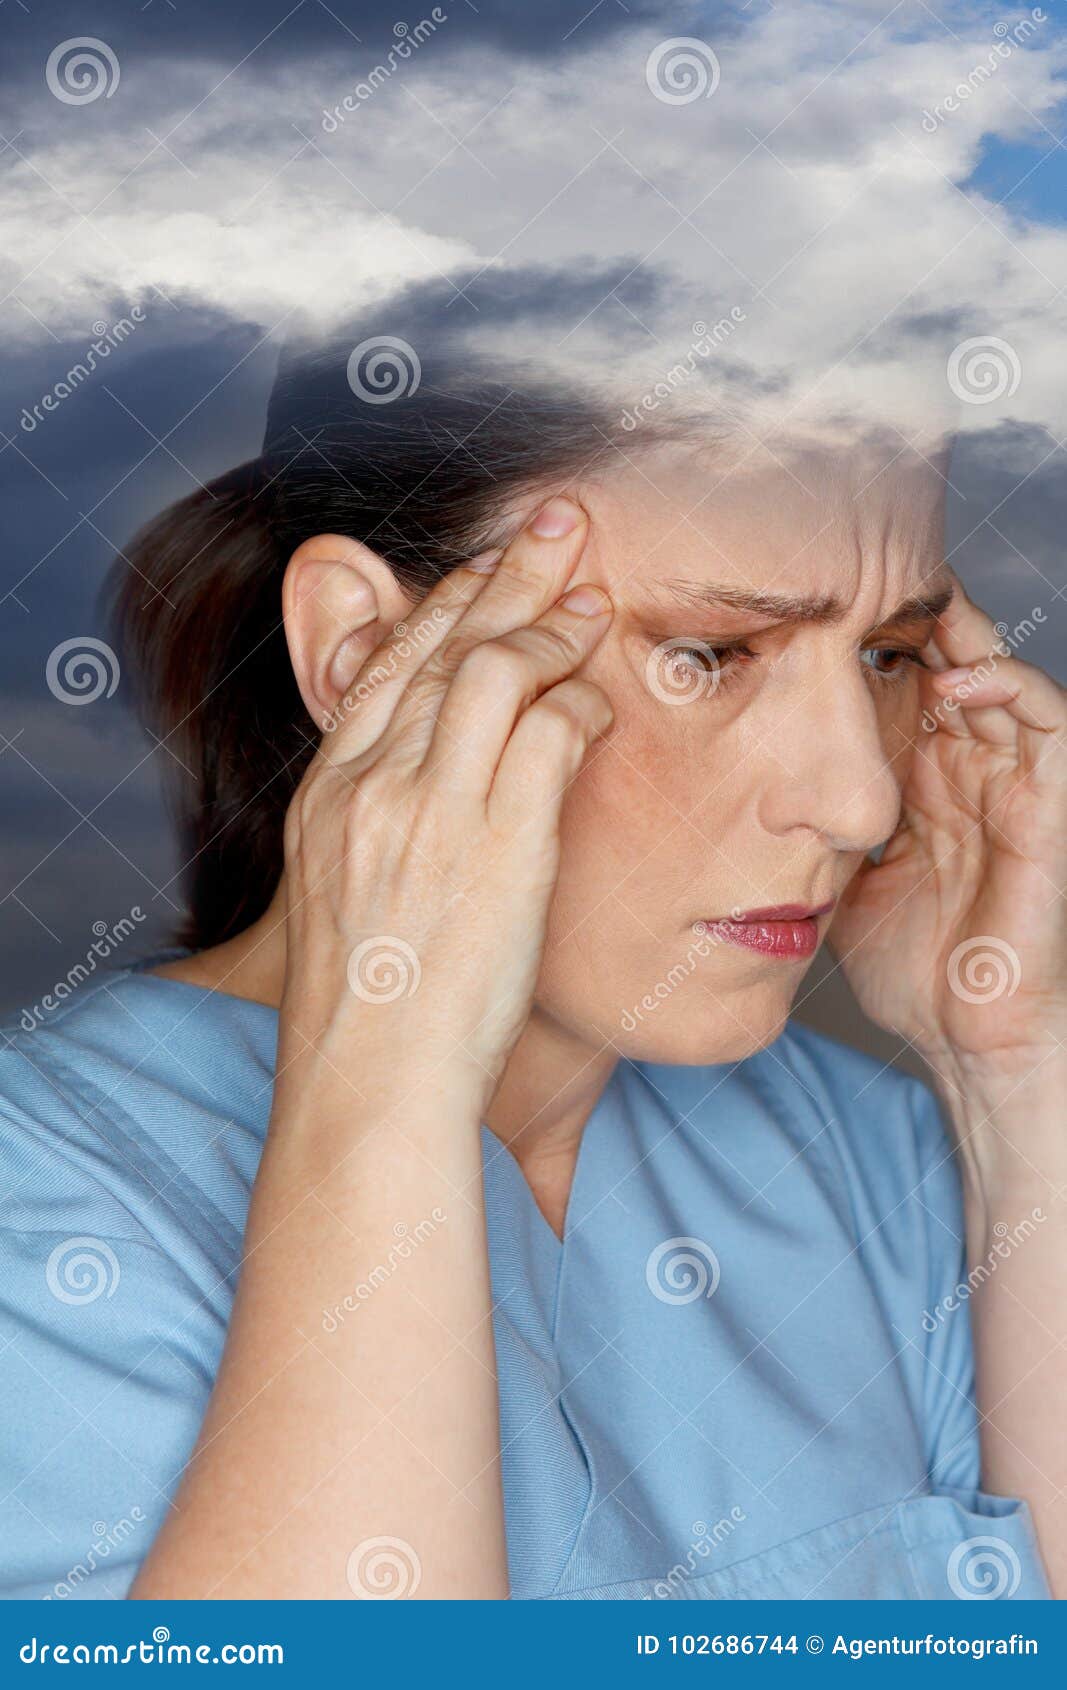 weather sensitivity sensitive woman headache